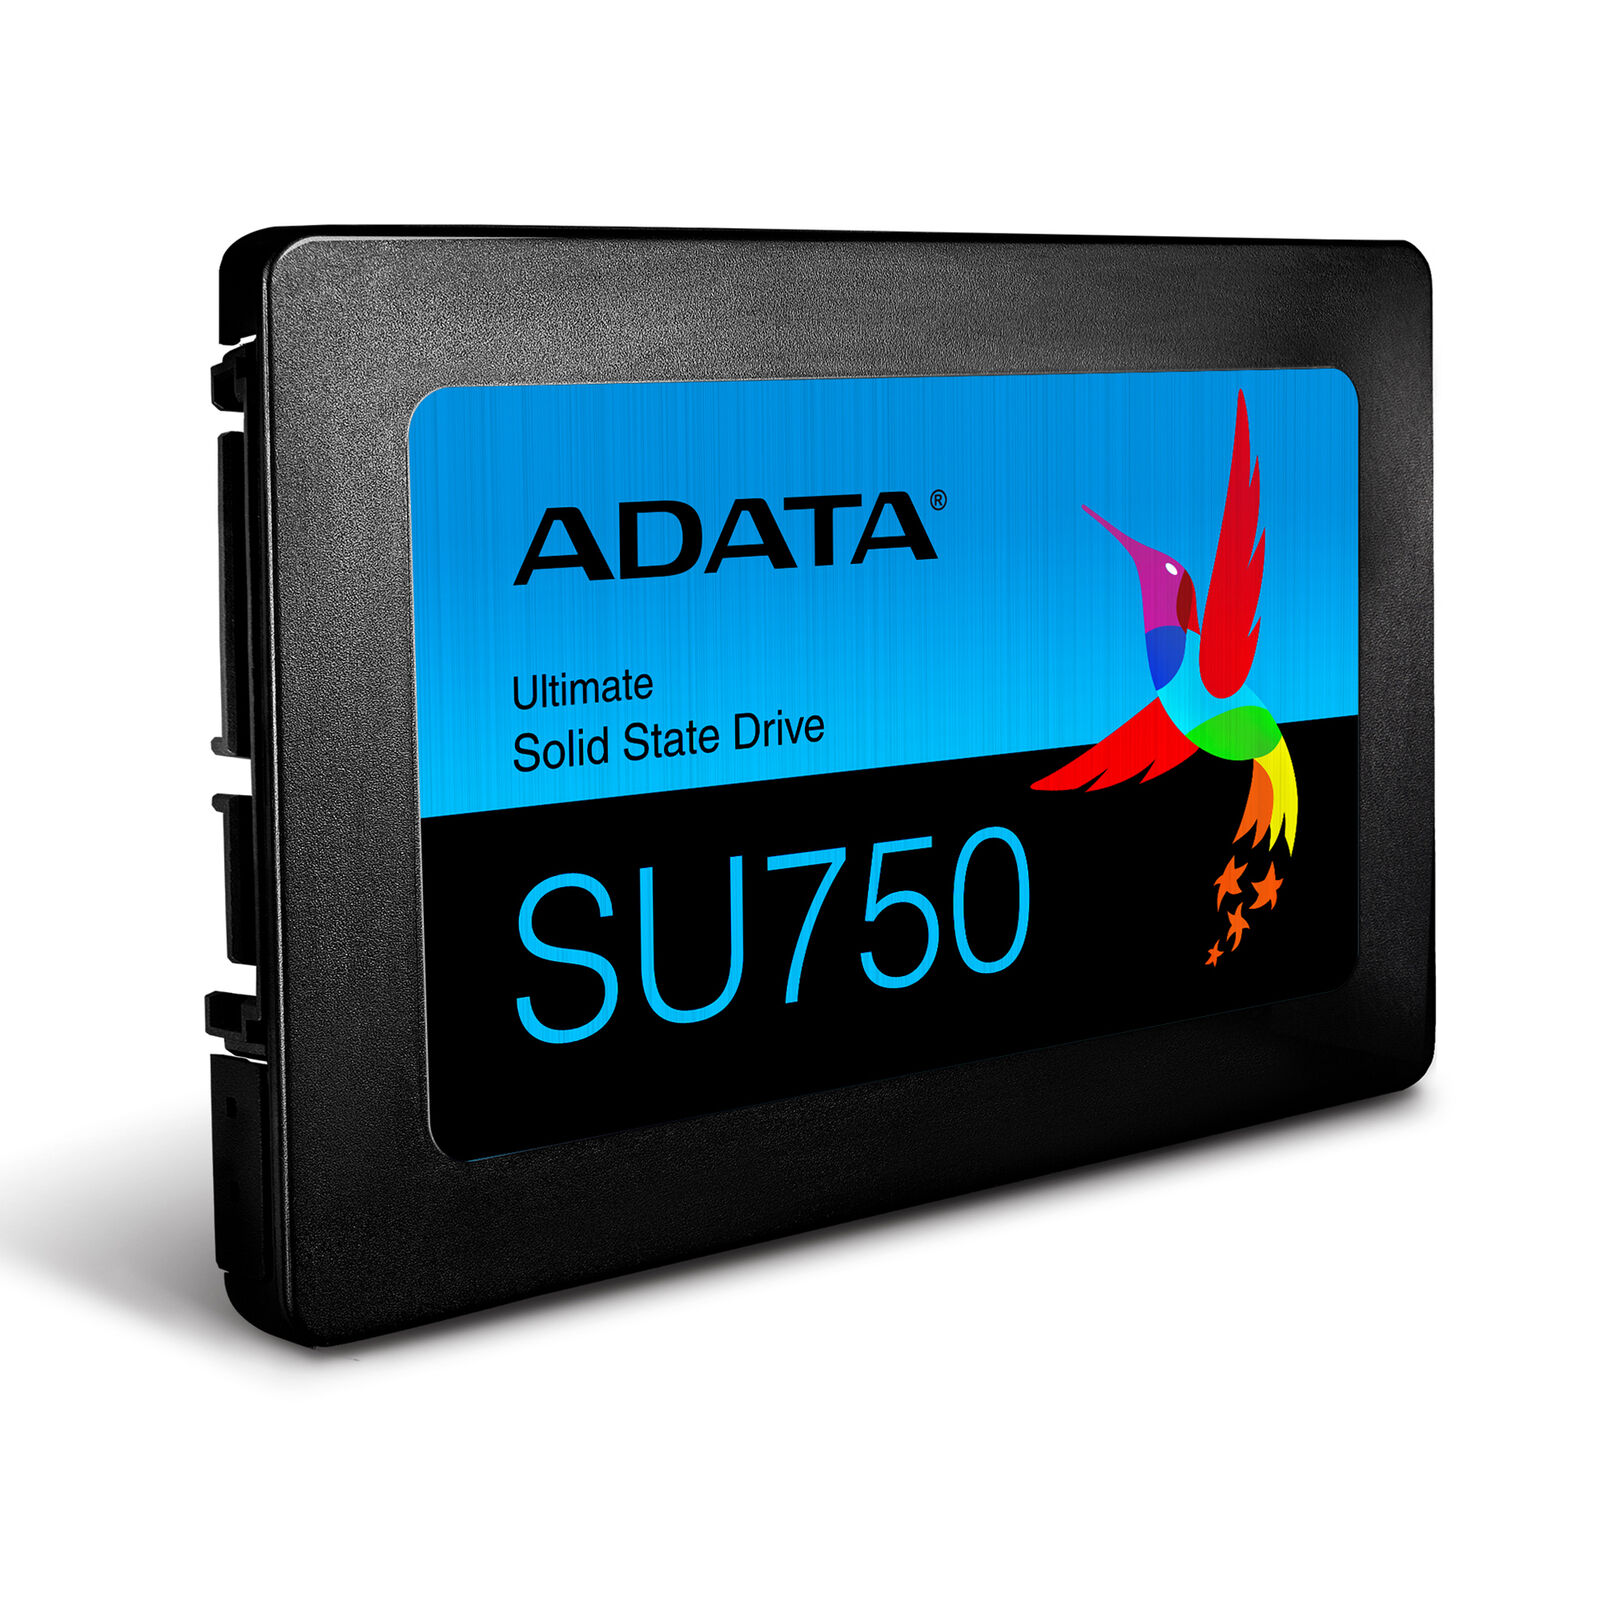 ADATA Ultimate Series SU750 Internal SSD 256GB SATA III 2.5